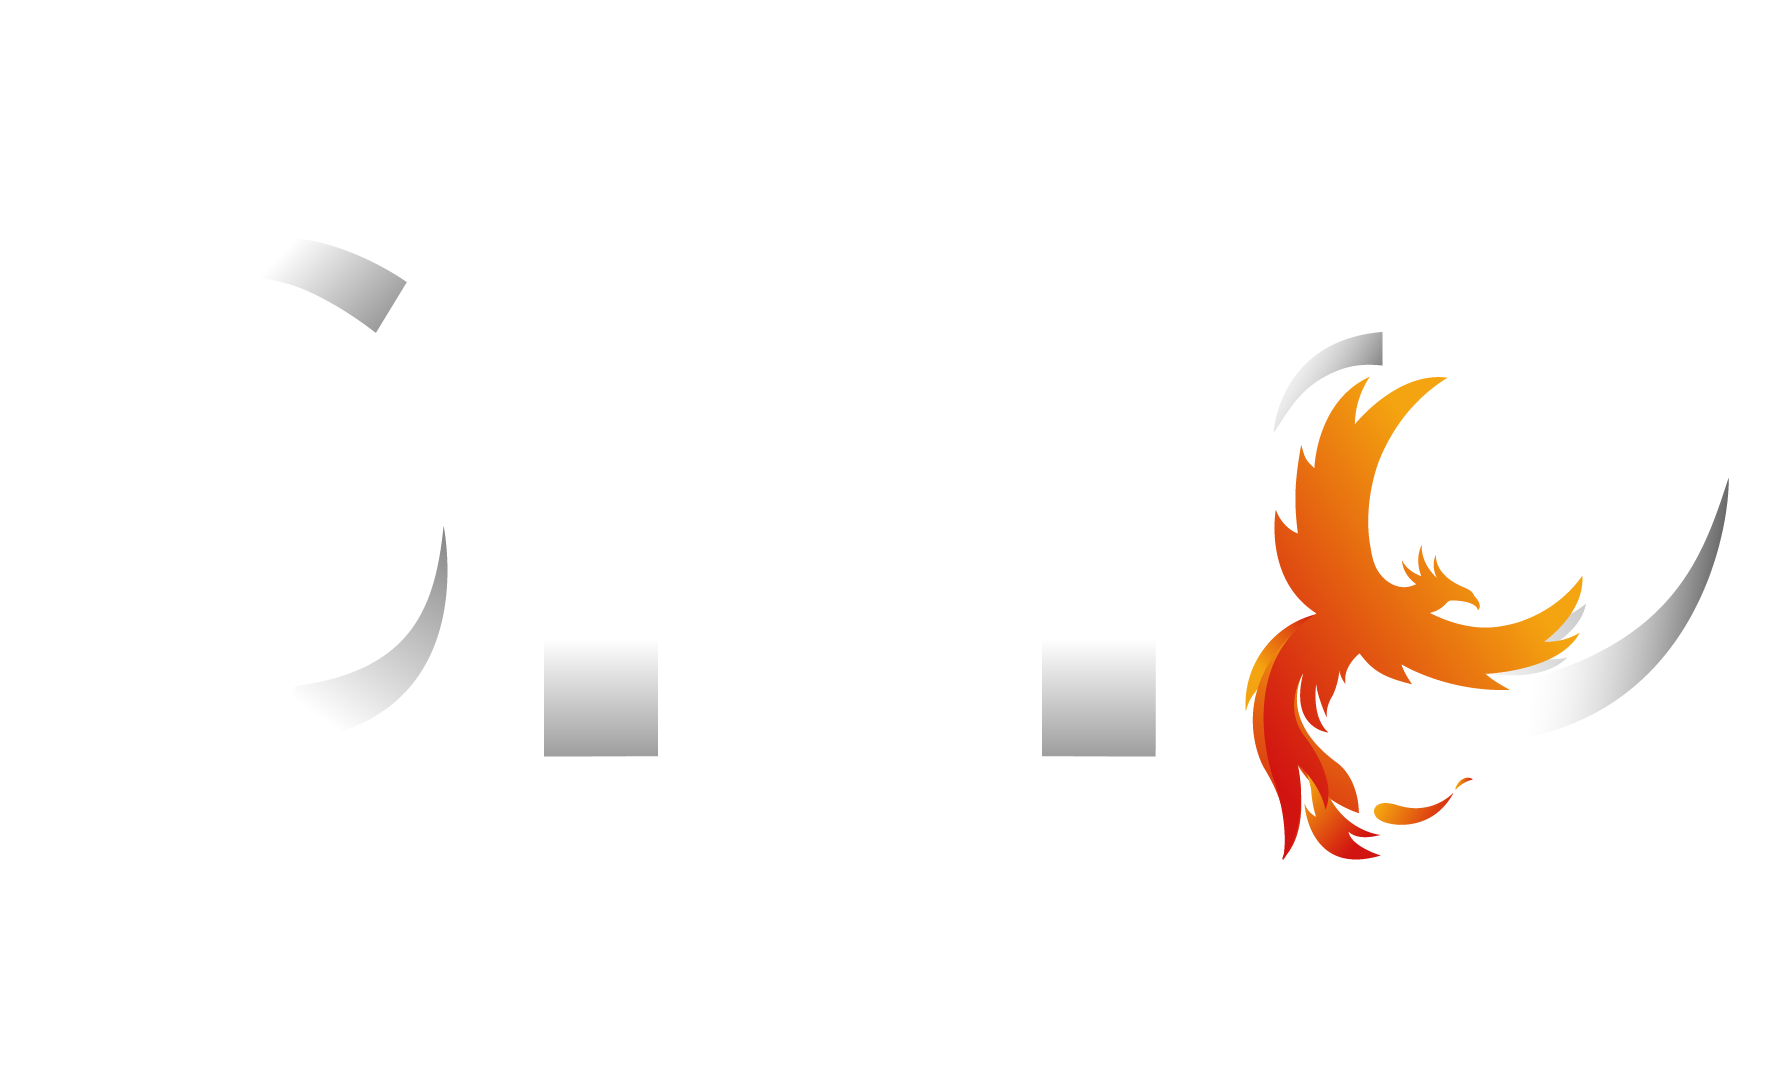 SMD Academy